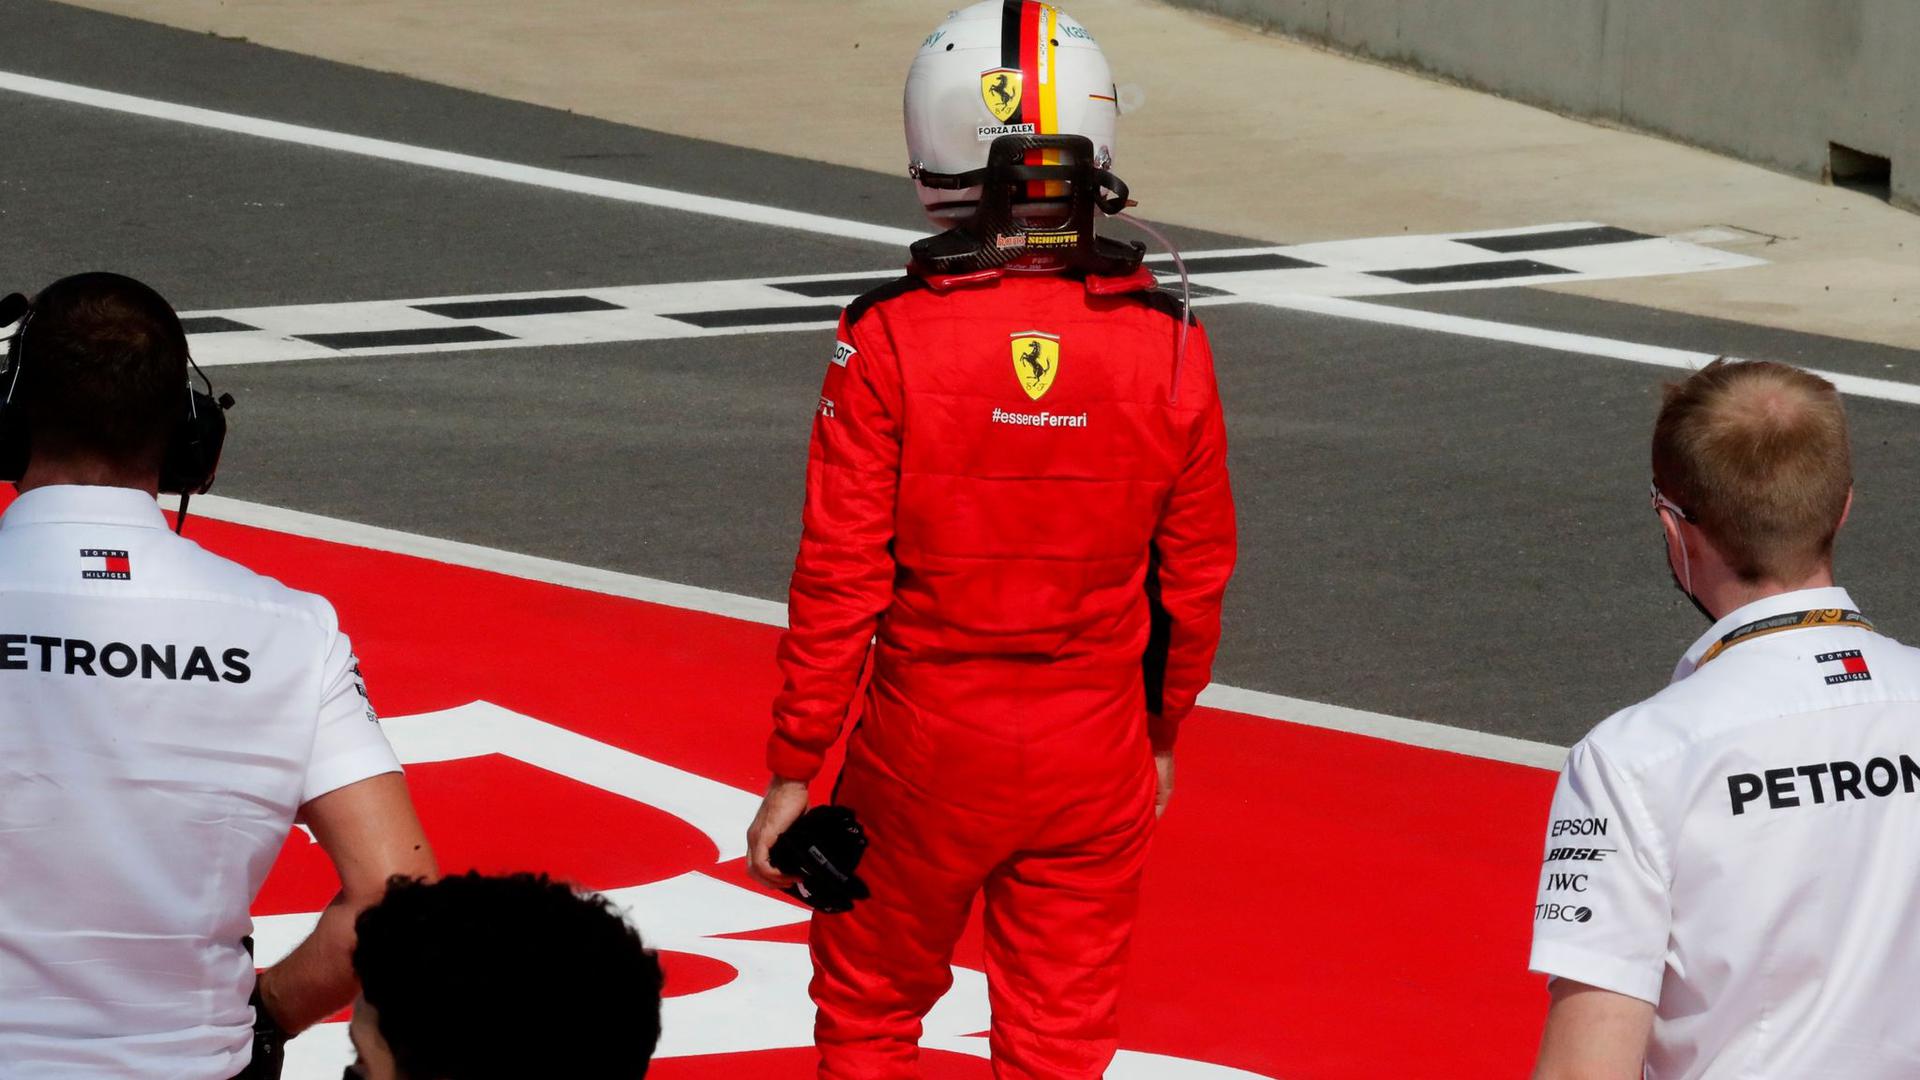 Ging auch beim zweiten Silverstone-Rennen leer aus: Ferrari-Pilot Sebastian Vettel (M).